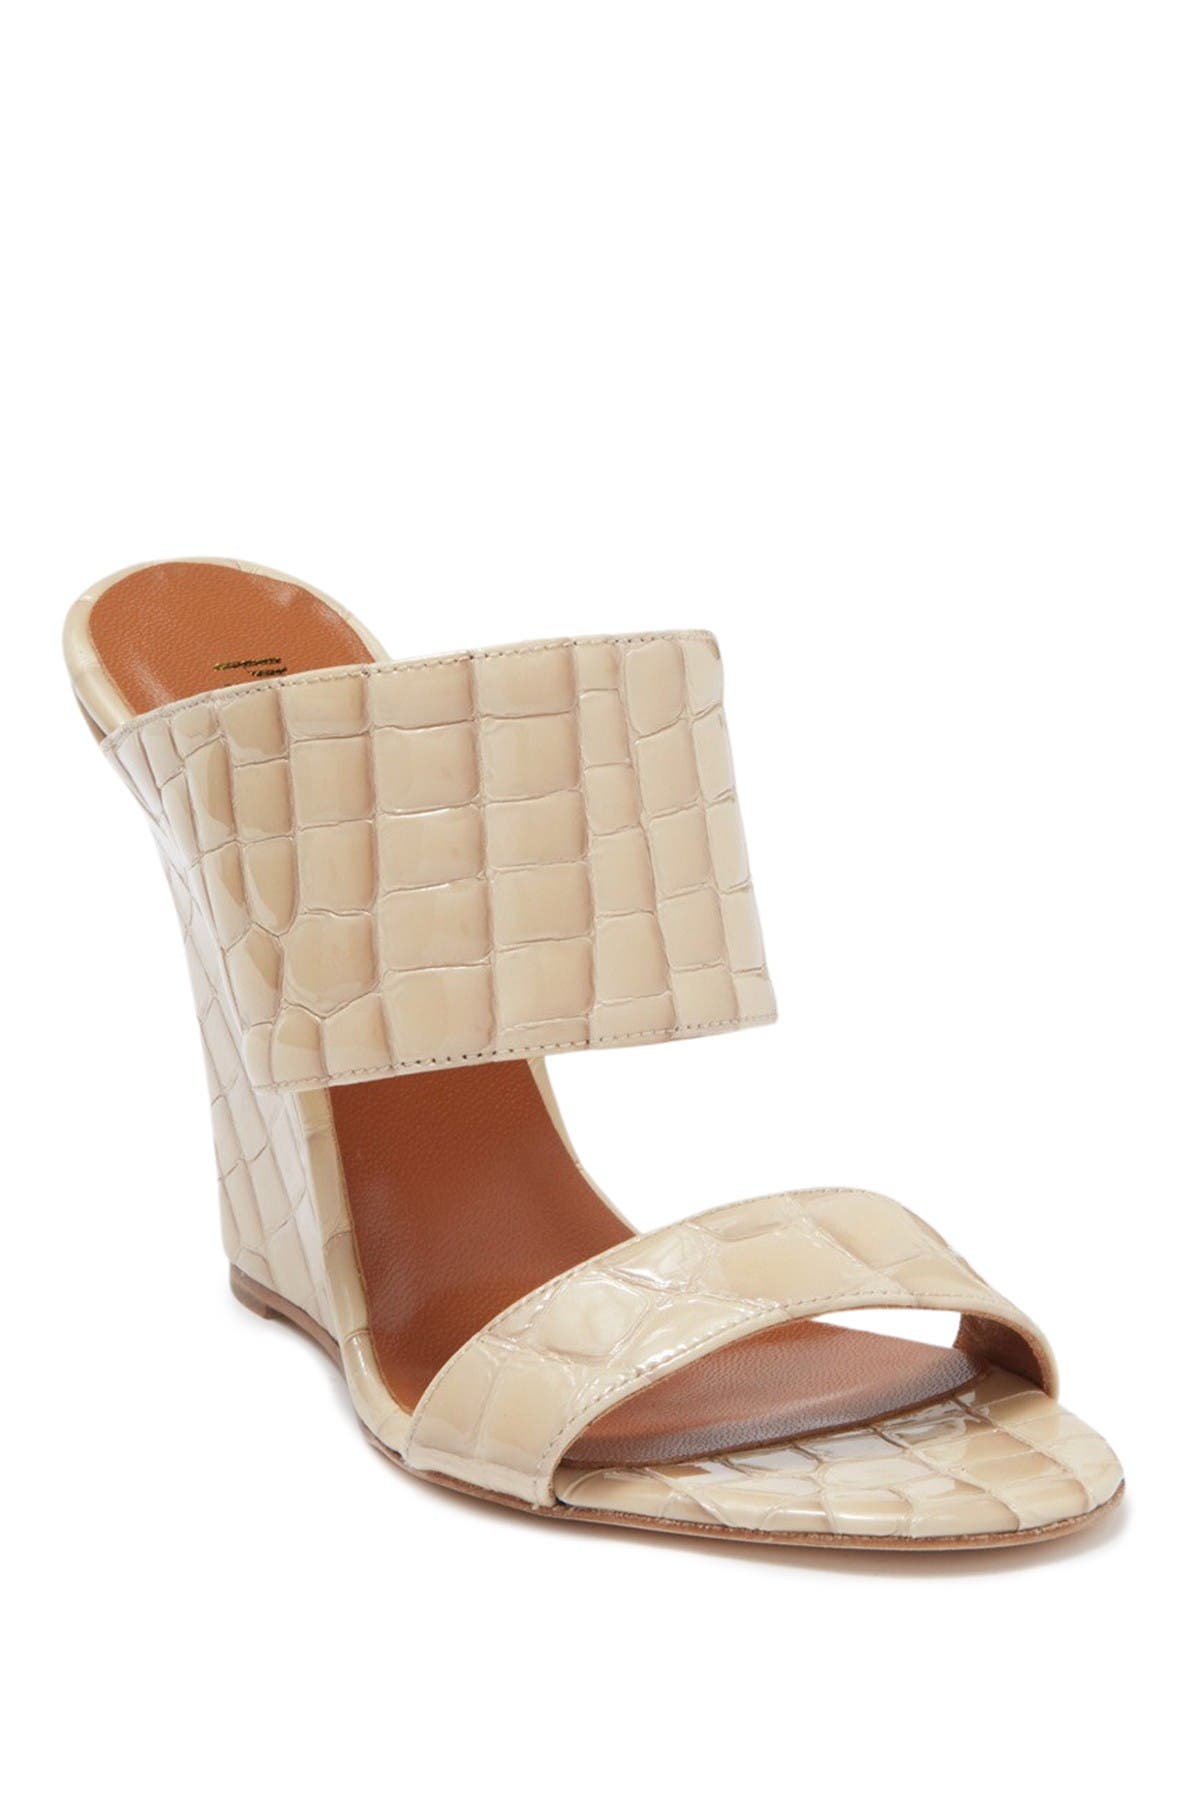 Paris Texas Patent Croco Print Leather Wedge Sandal In Dark Beige